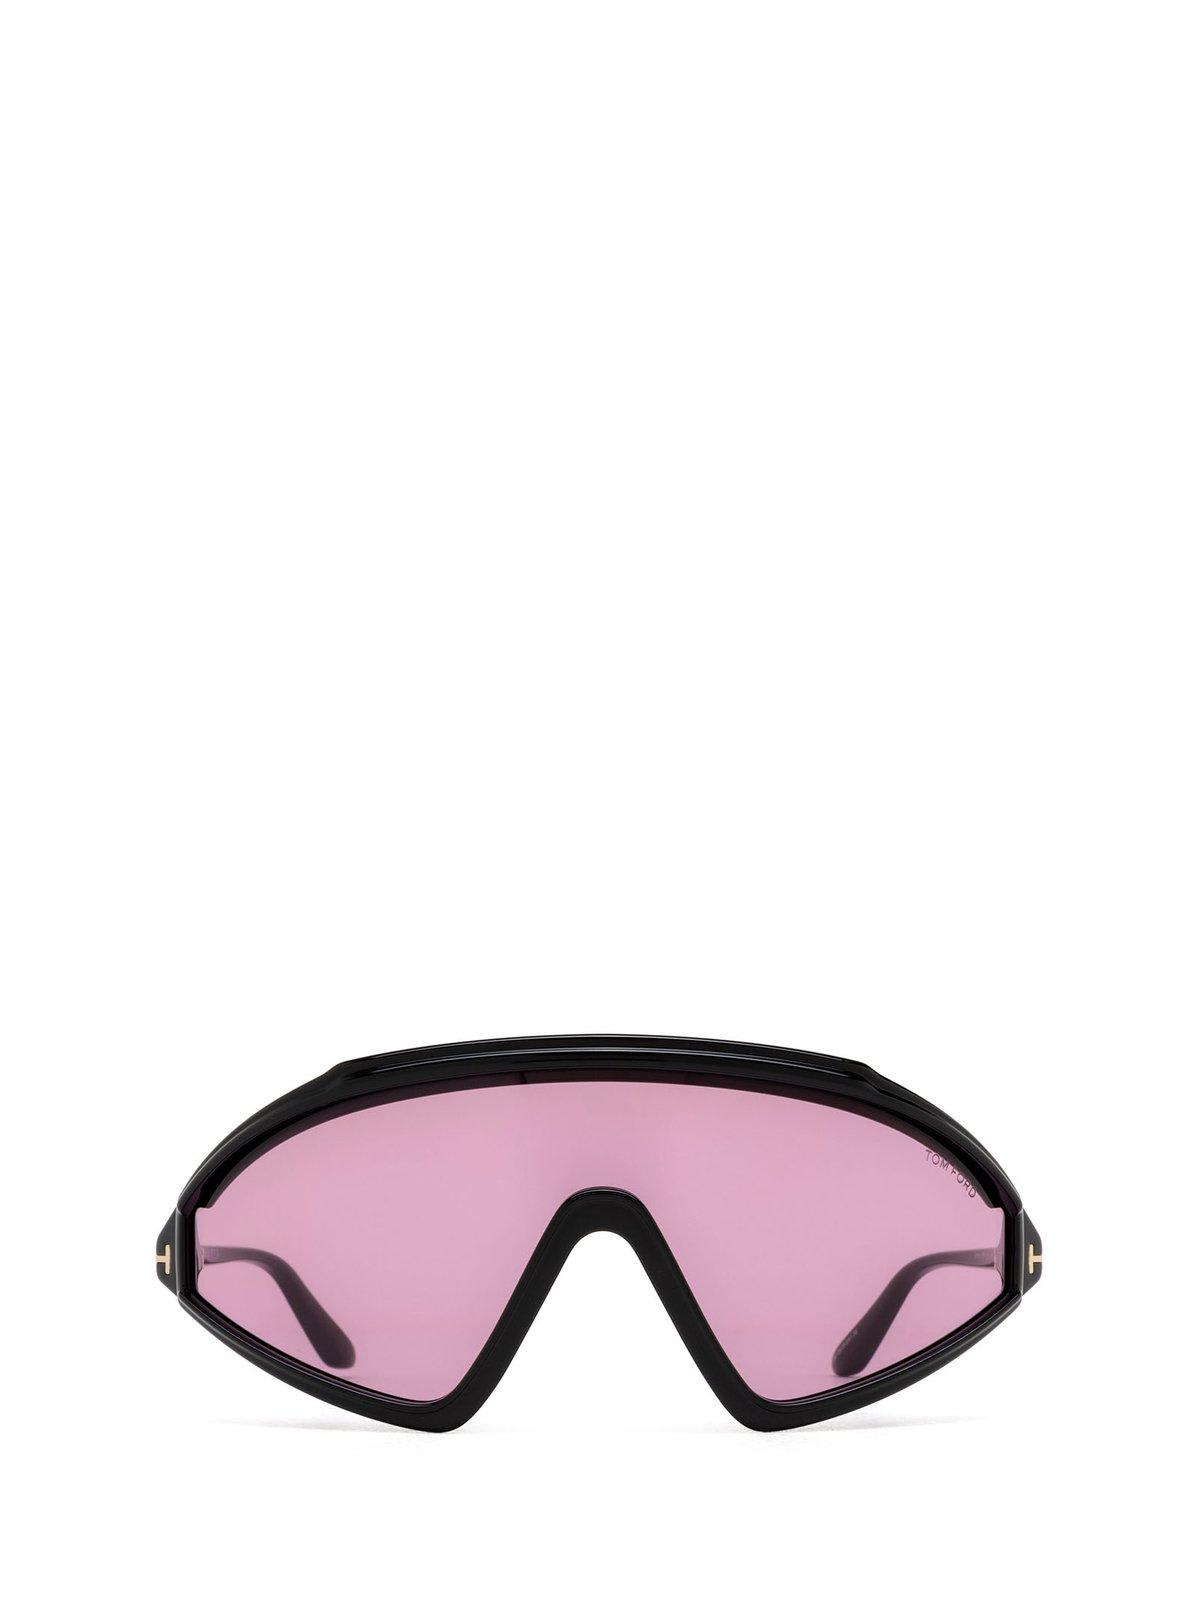 Lorna Shield Frame Sunglasses